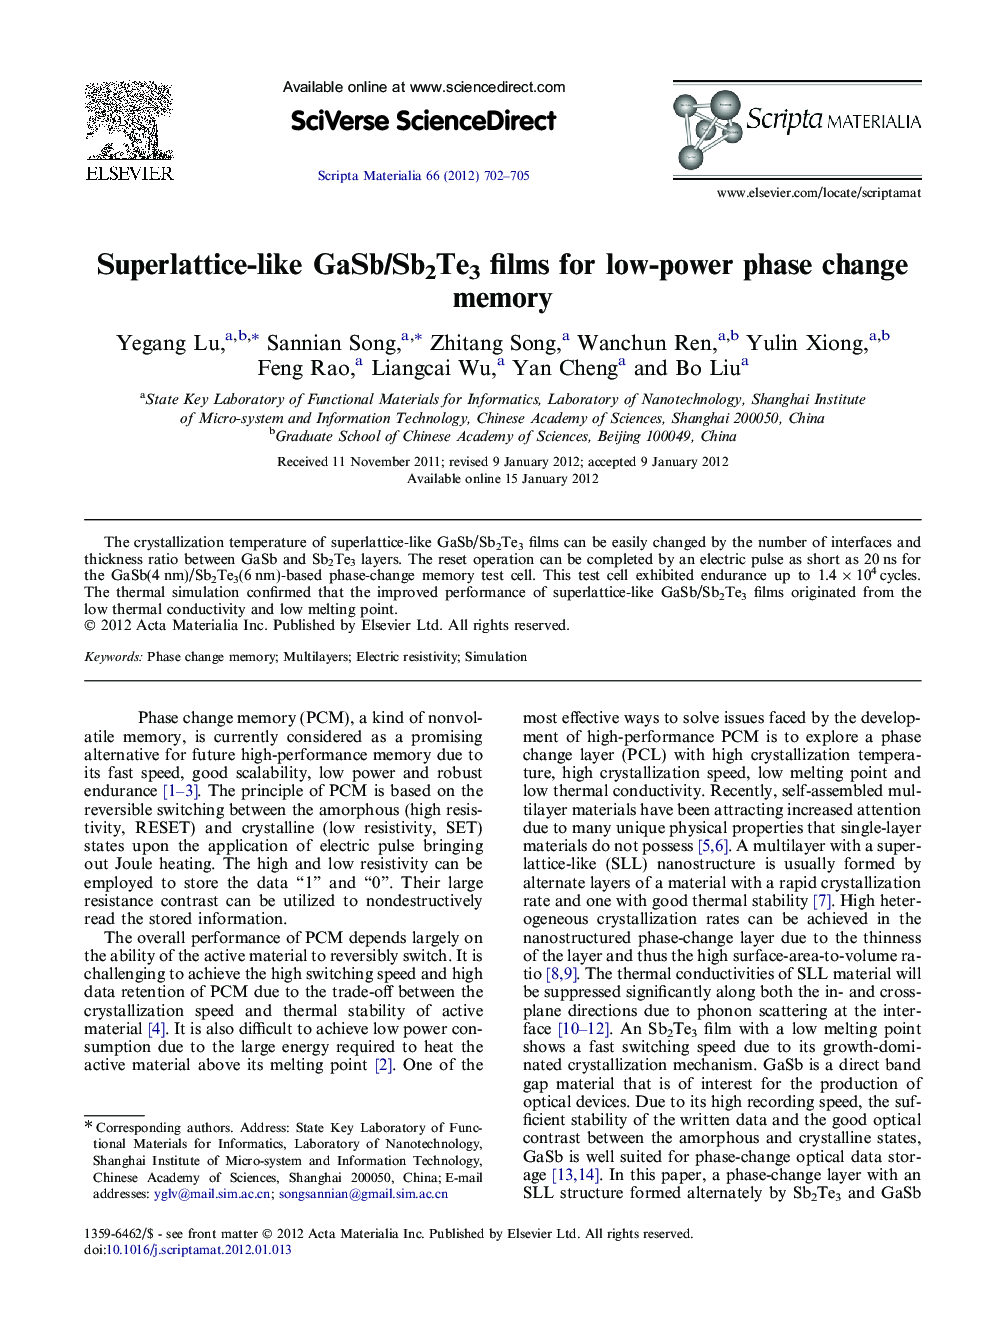 Superlattice-like GaSb/Sb2Te3 films for low-power phase change memory